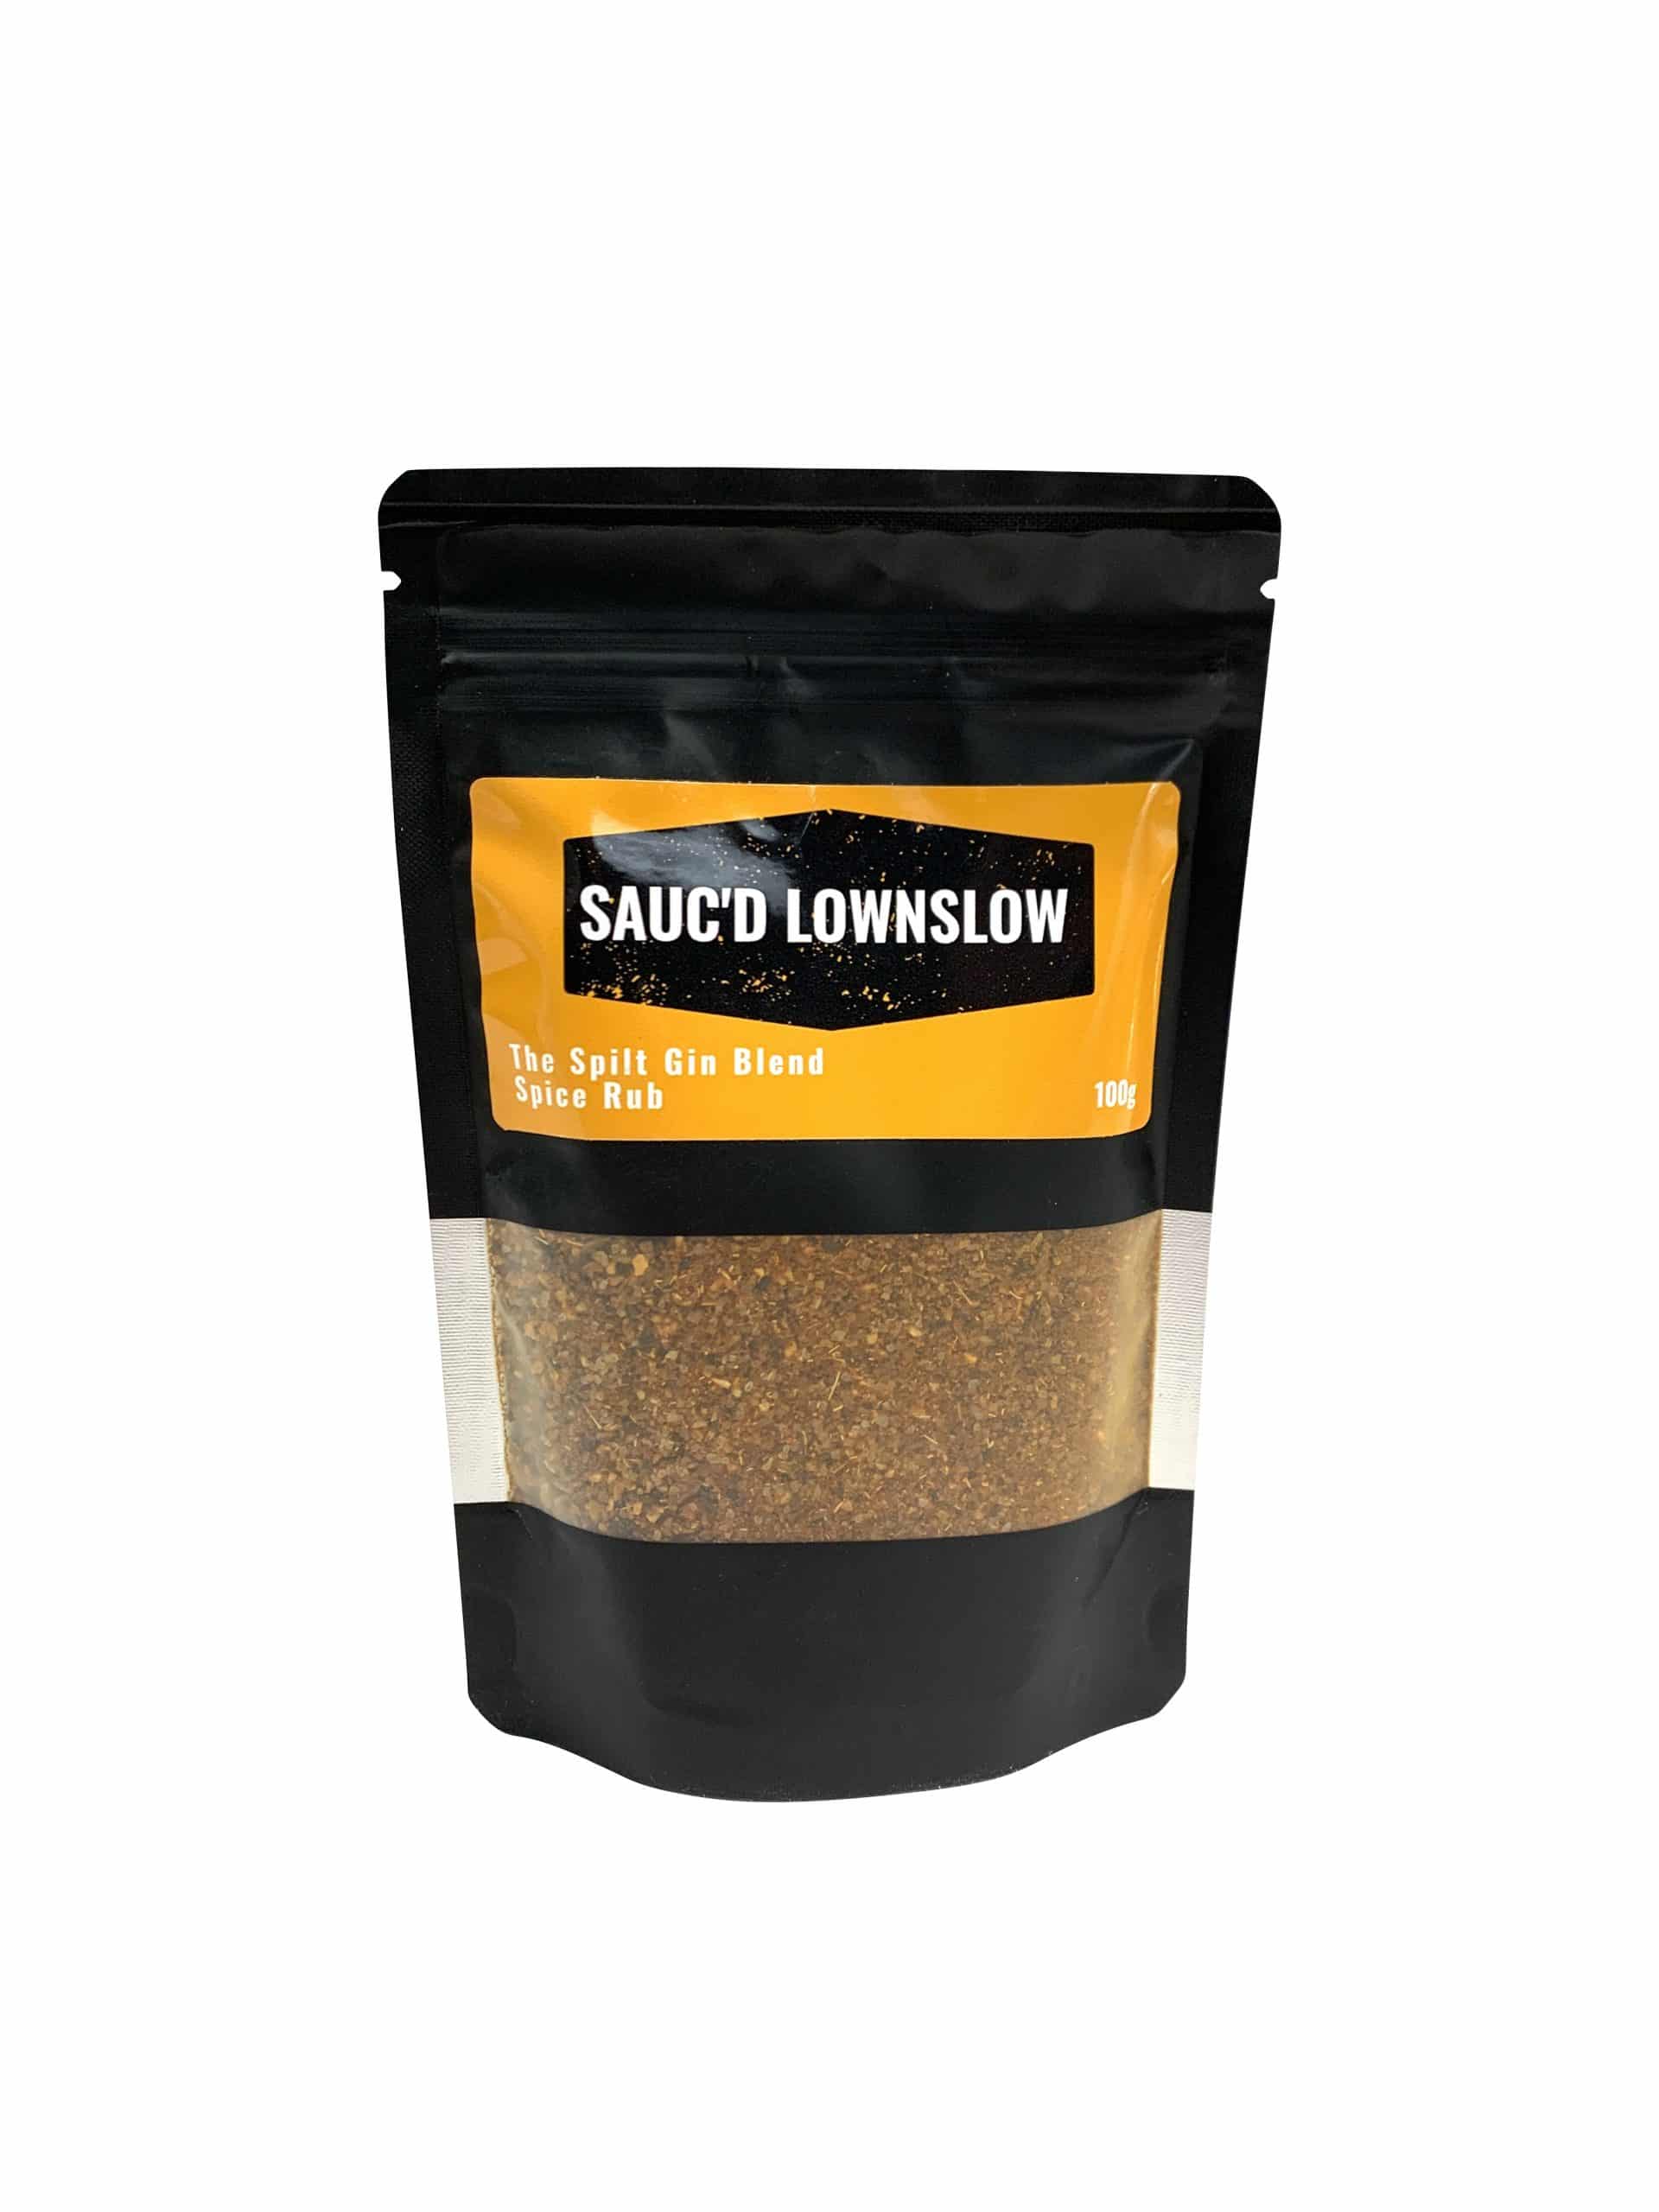 SAUC'D LOWNSLOW - The Gentlemen's Blend Coffee Spice Rub